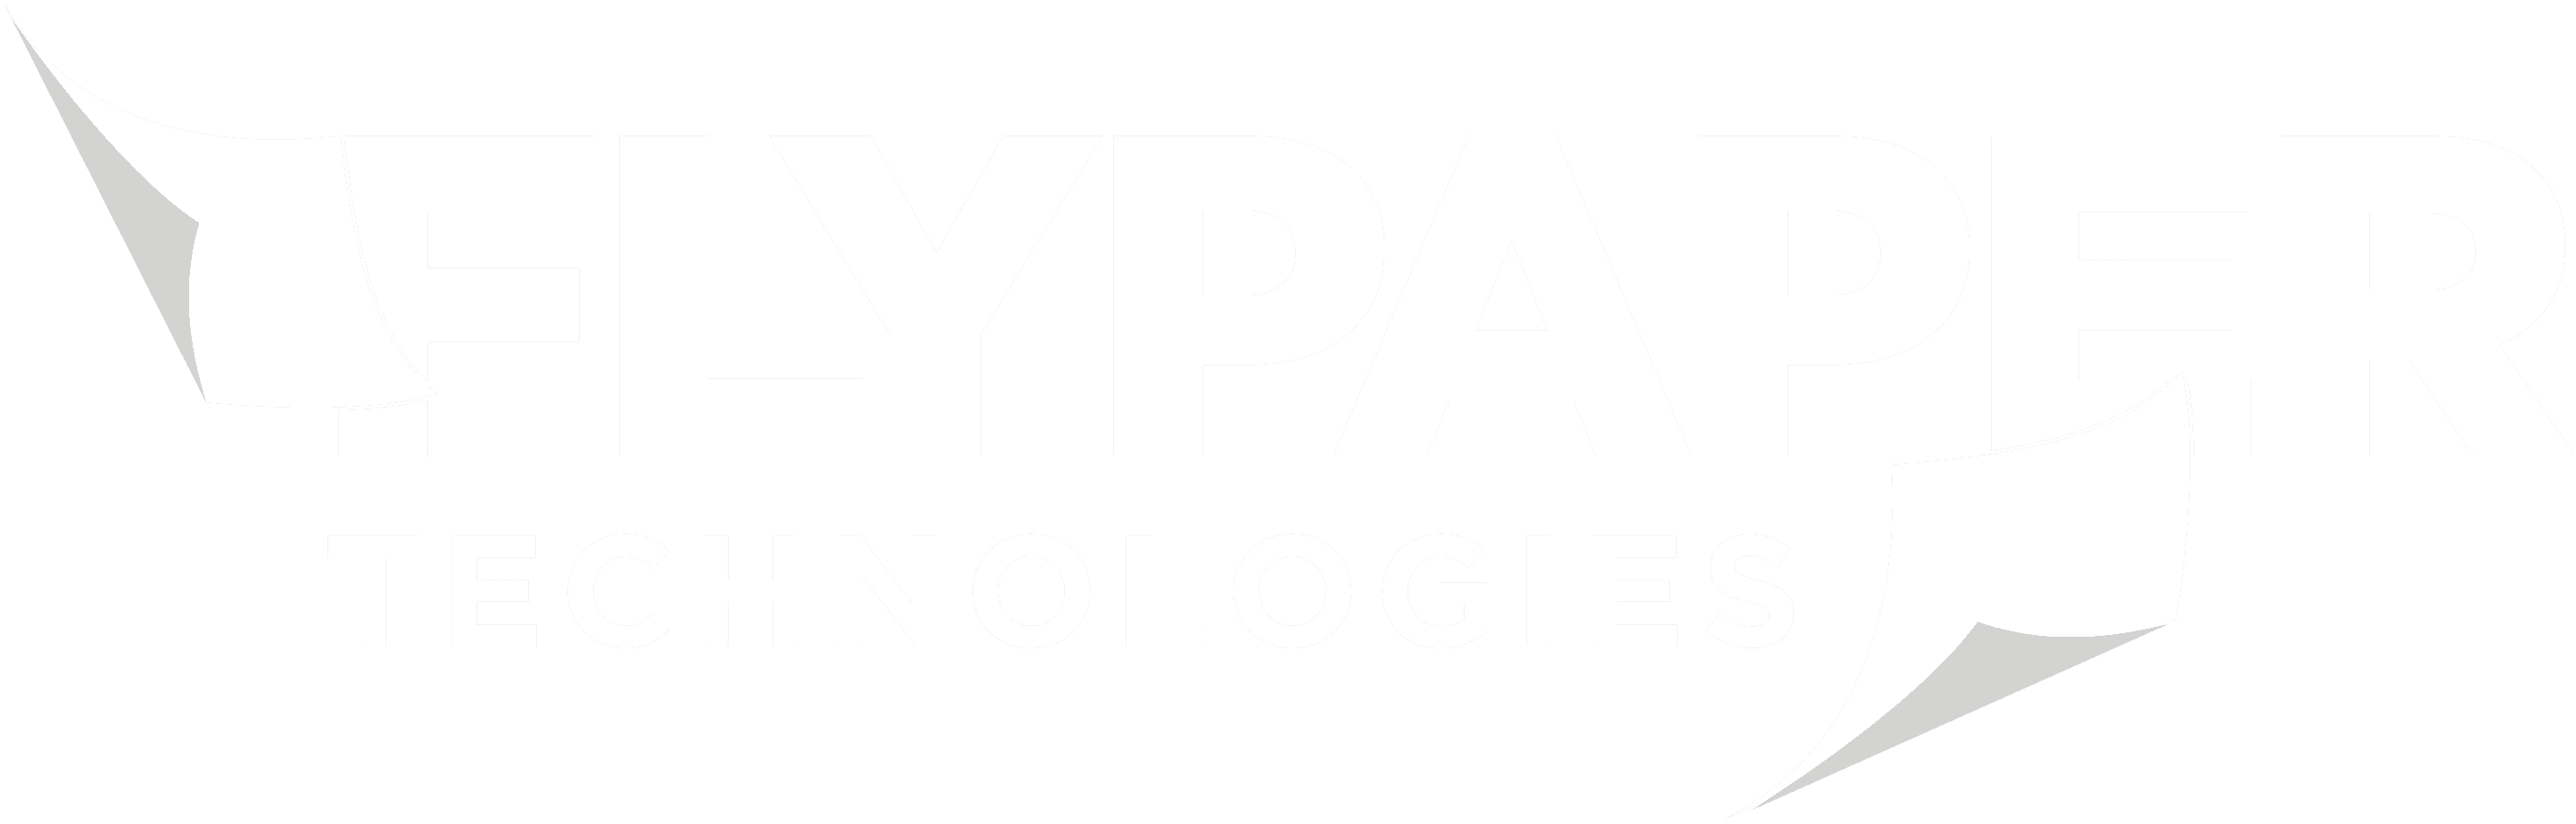 FlyPaper テクノロジー ロゴ ホワイト